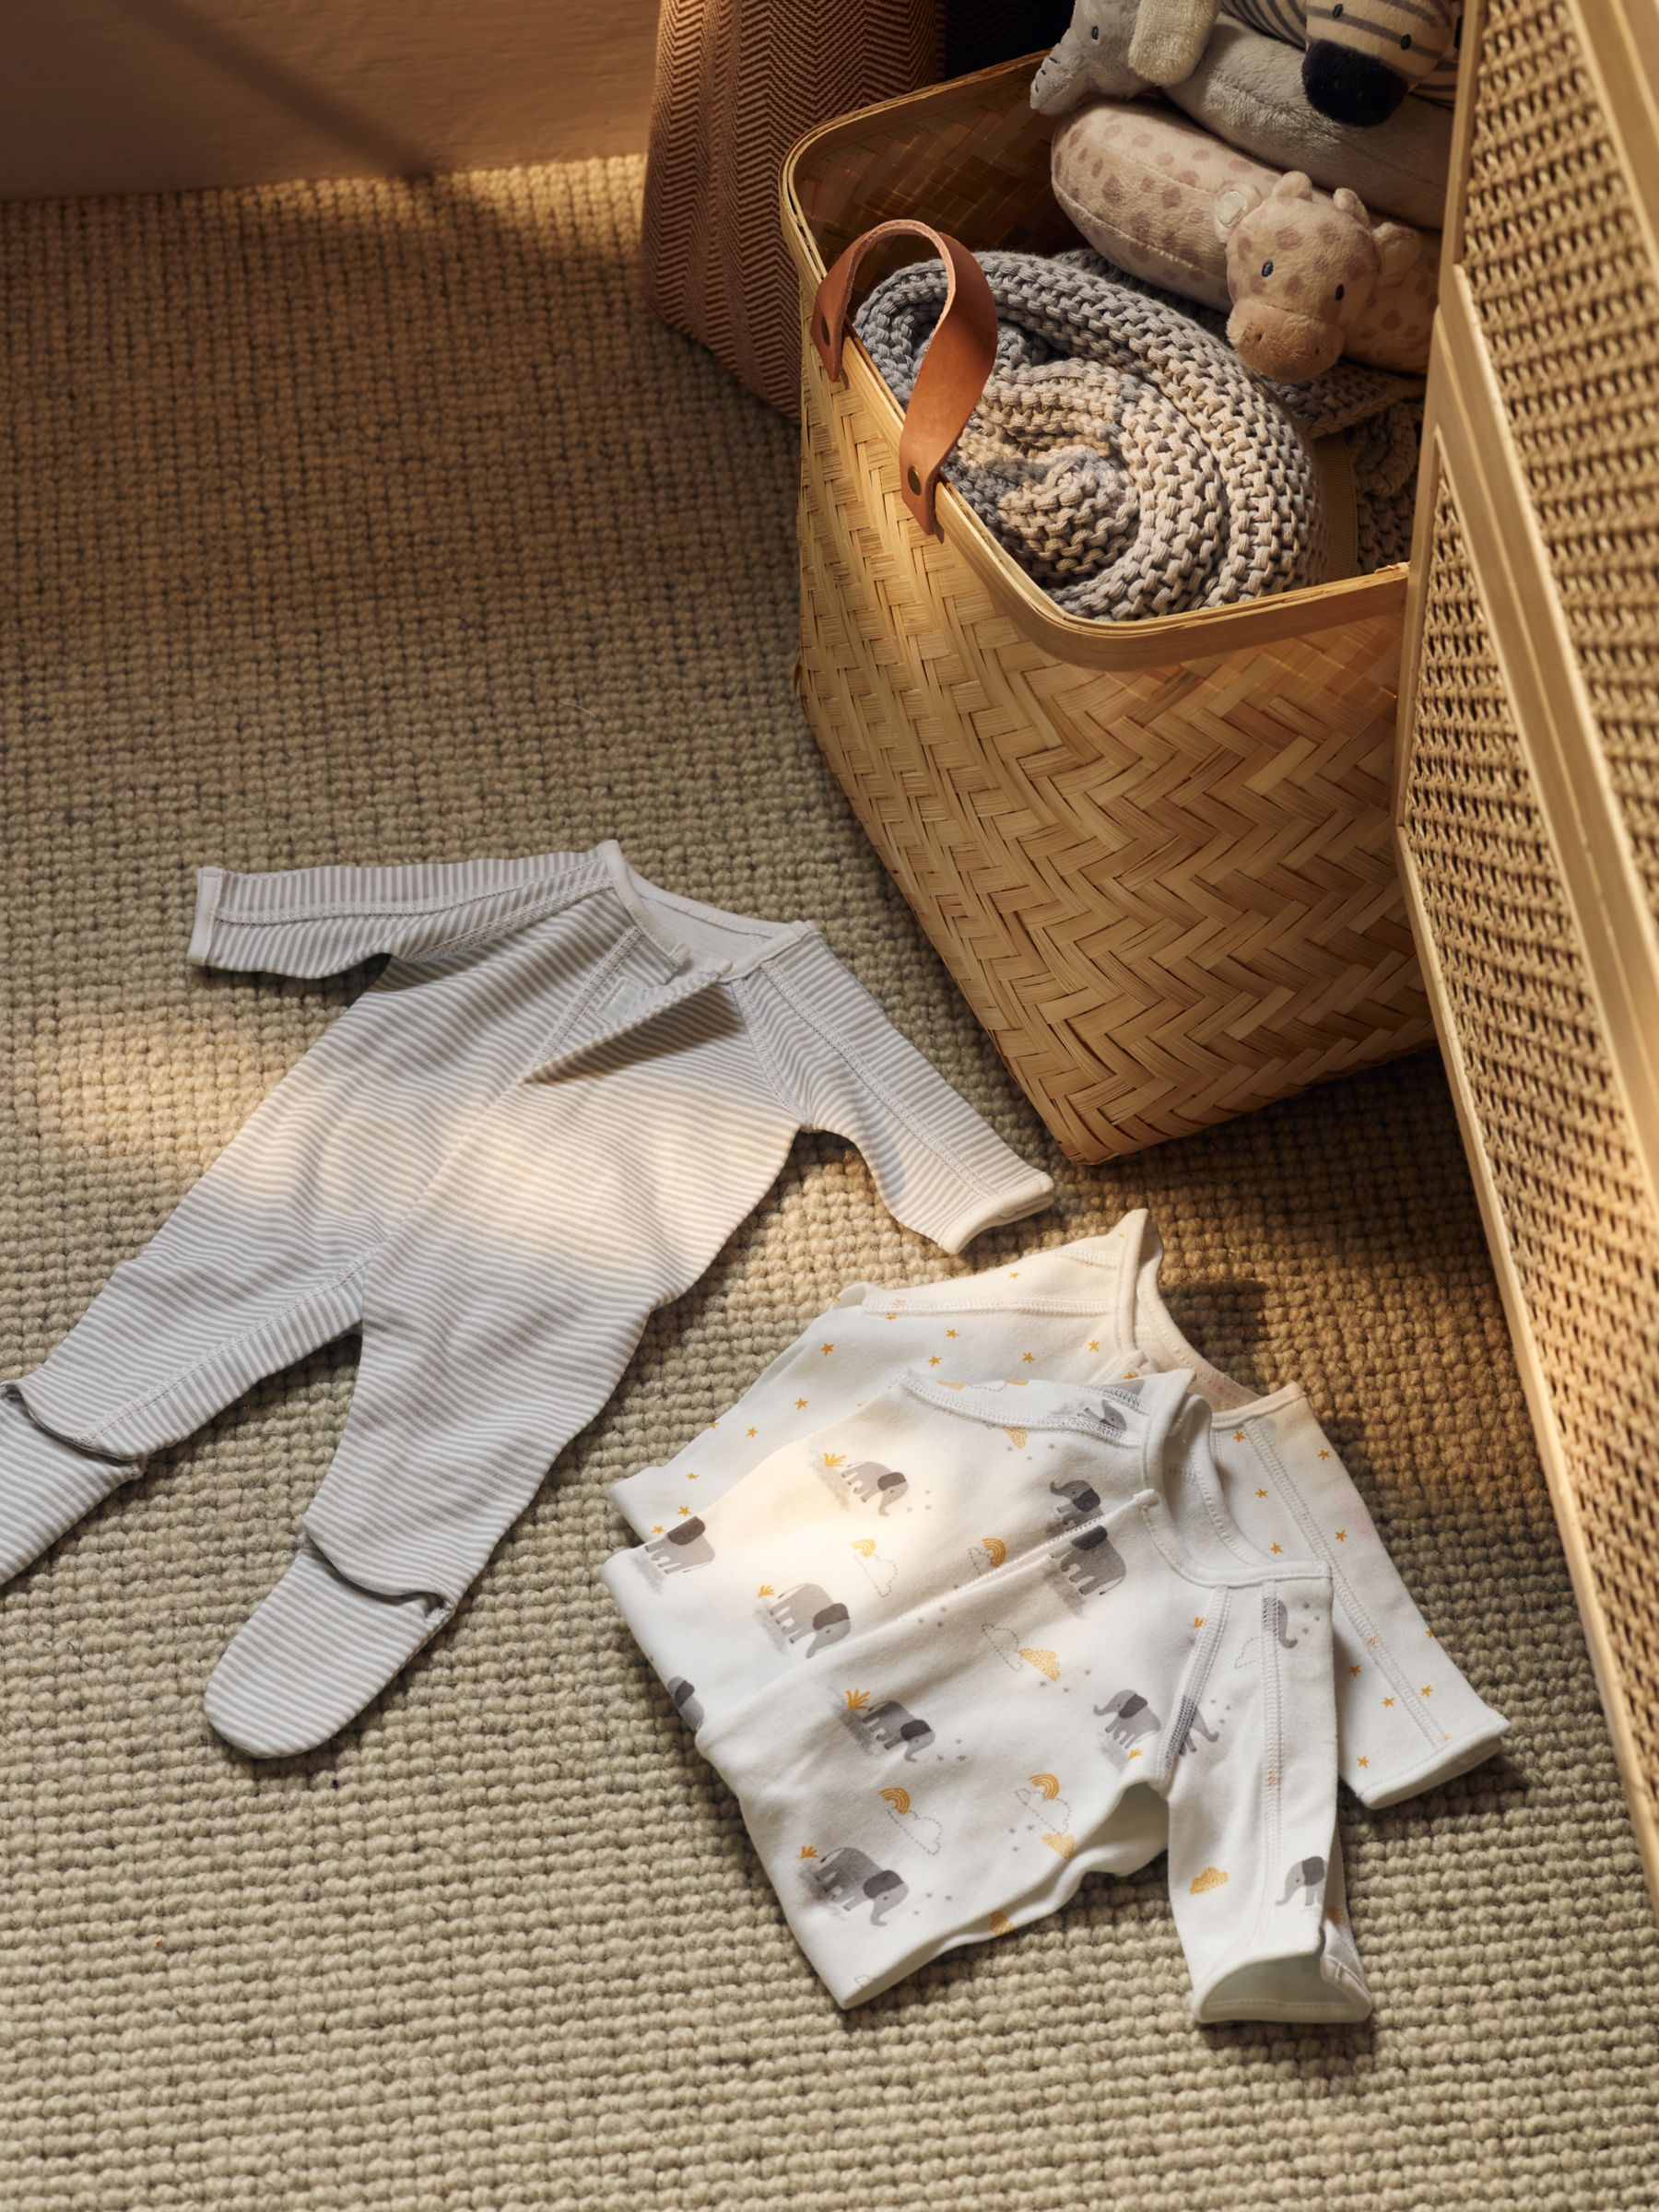 John Lewis Premature Baby GOTS Organic Cotton Elephant Sleepsuit, Pack of 3, Grey, 3lb